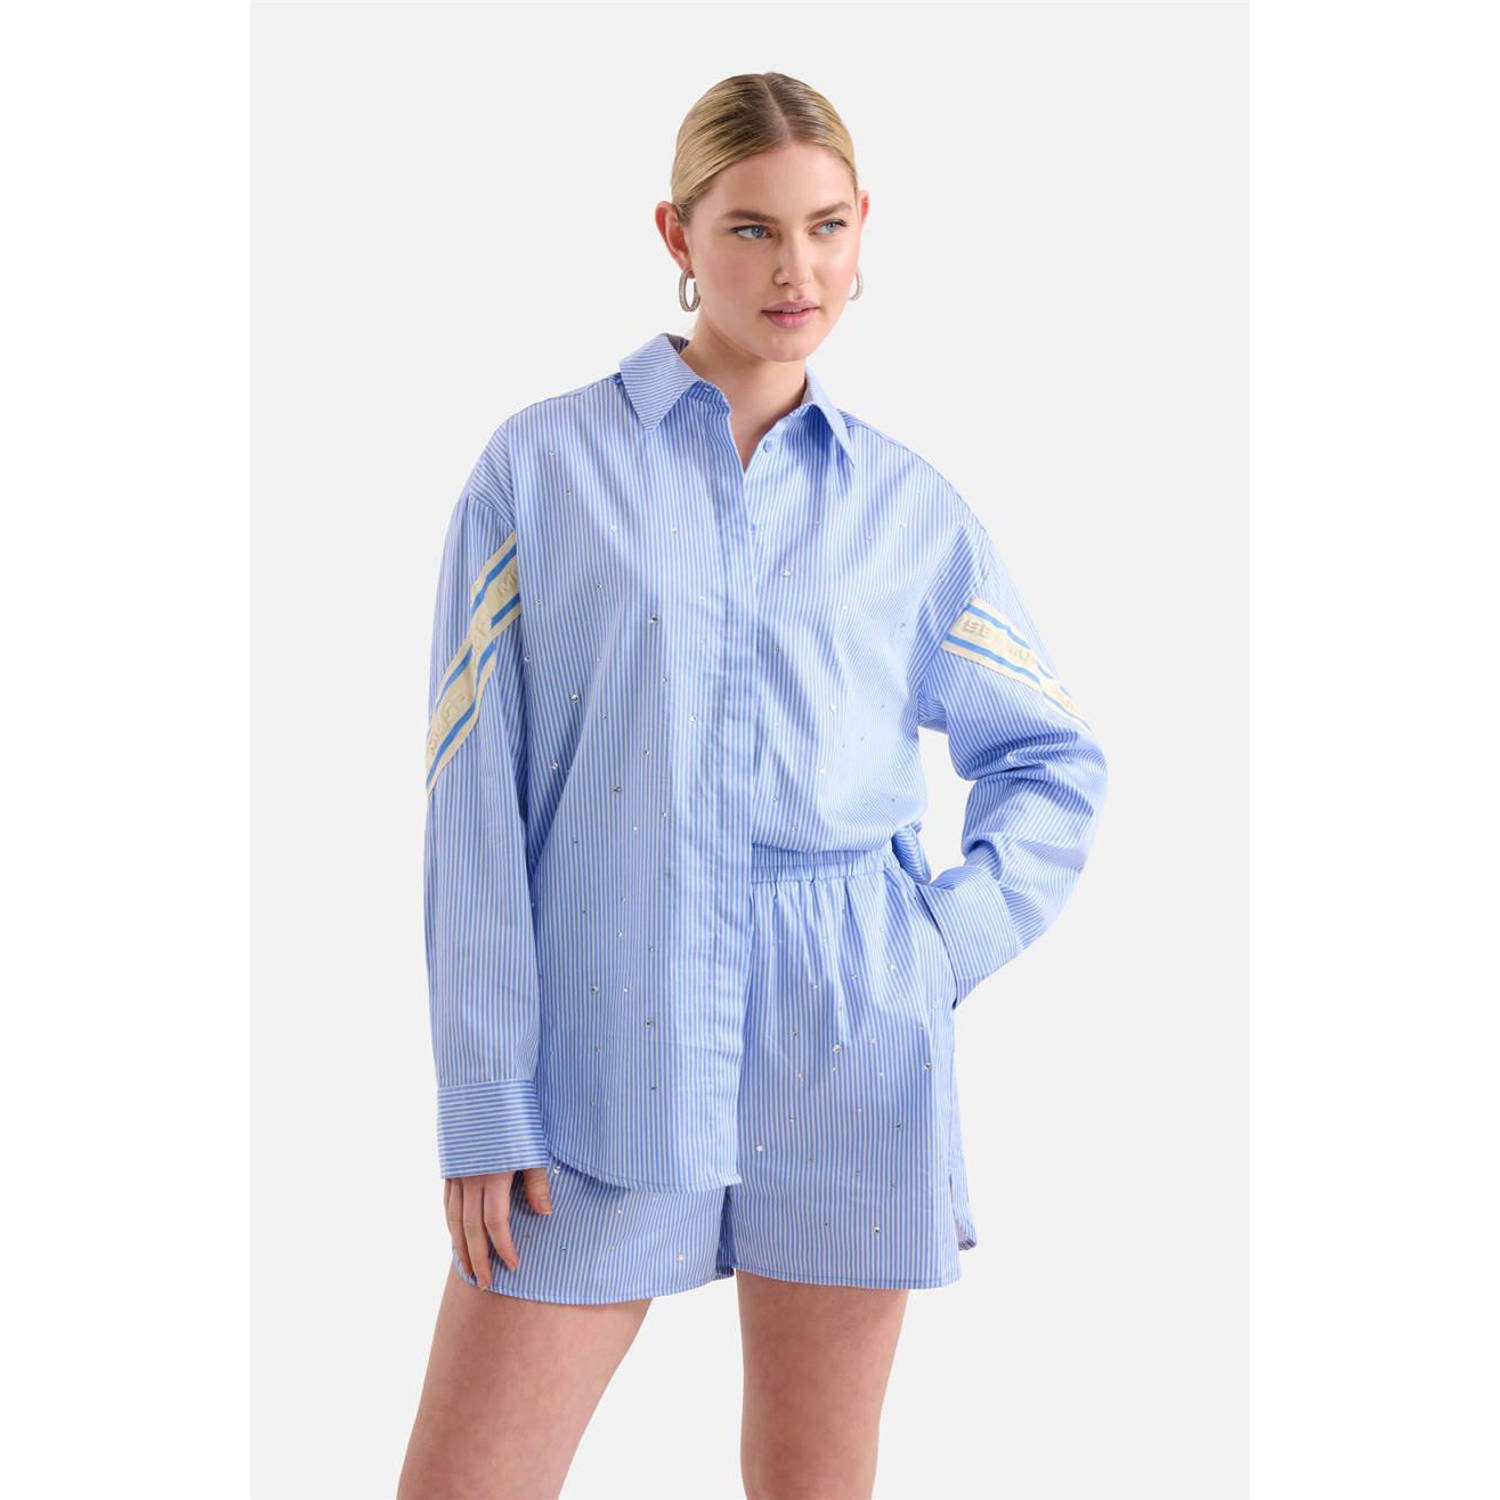 Shoeby blouse met all over print en strass steentjes lichtblauw